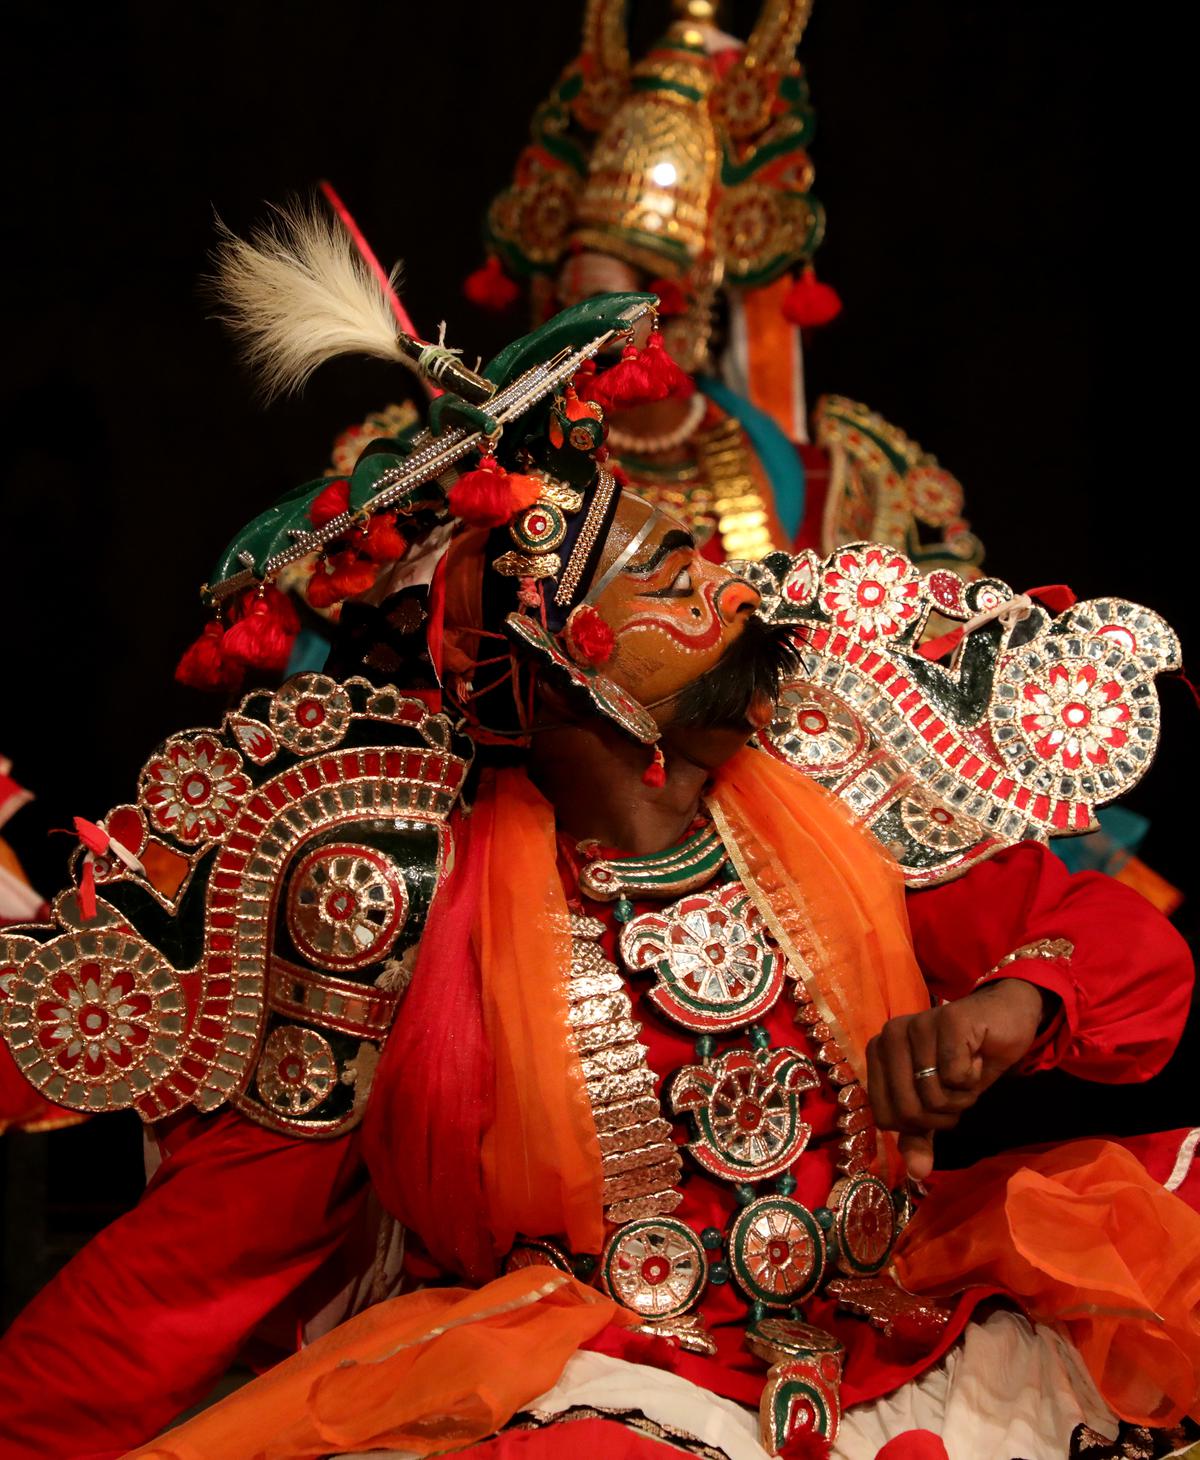 Kattaikoothu artists performing Panchali’s wedding from The Mahabharata at Kattaikkuttu Sangam, Kancheepuram.